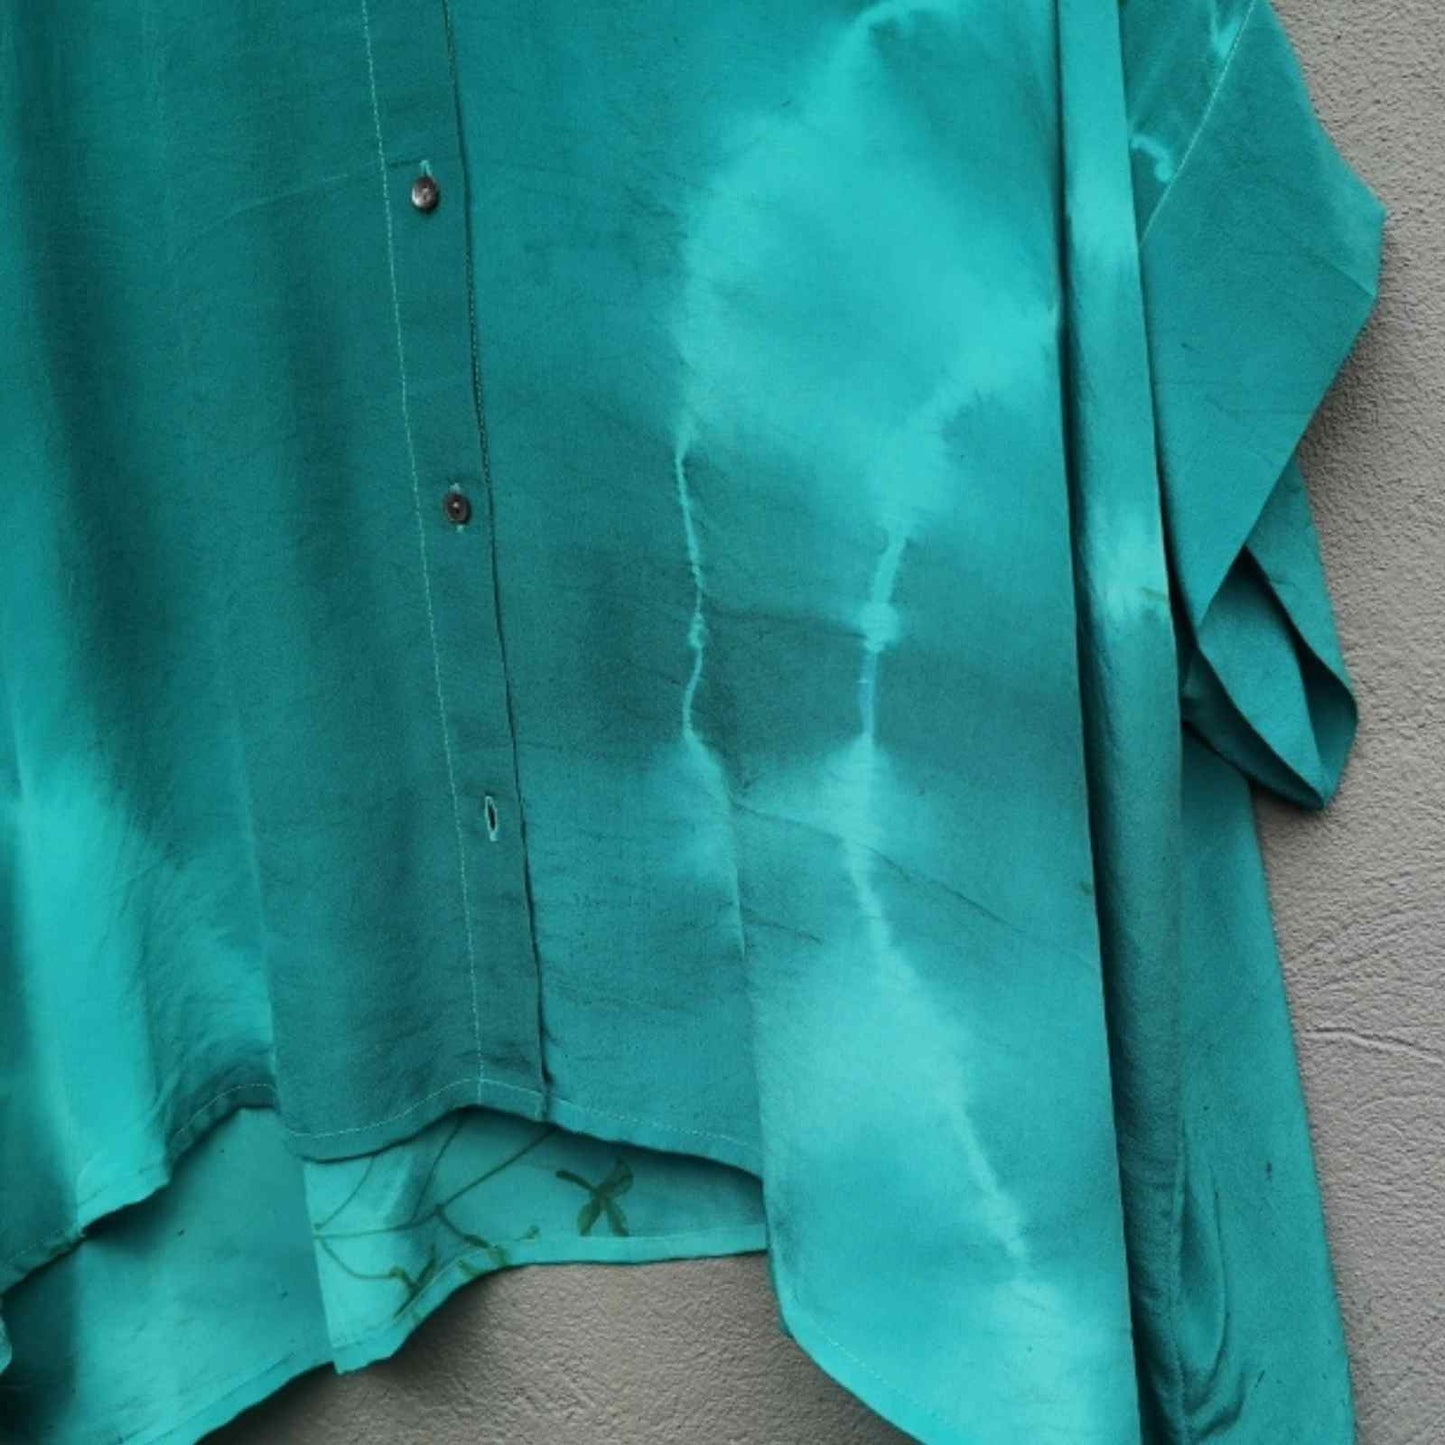 Knapper og ærme på turkis silkeskjorte